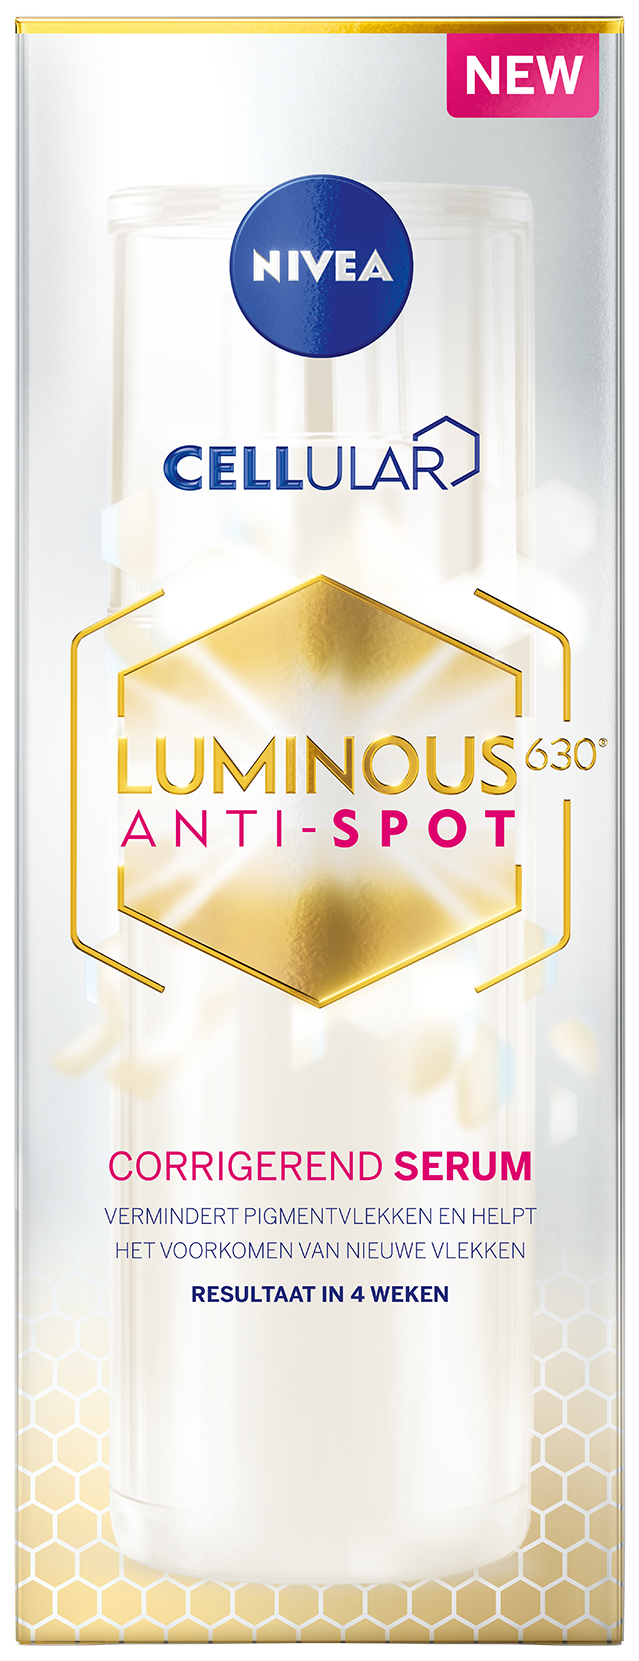 NIVEA CELLULAR LUMINOUS630® Anti-Spot productlijn 